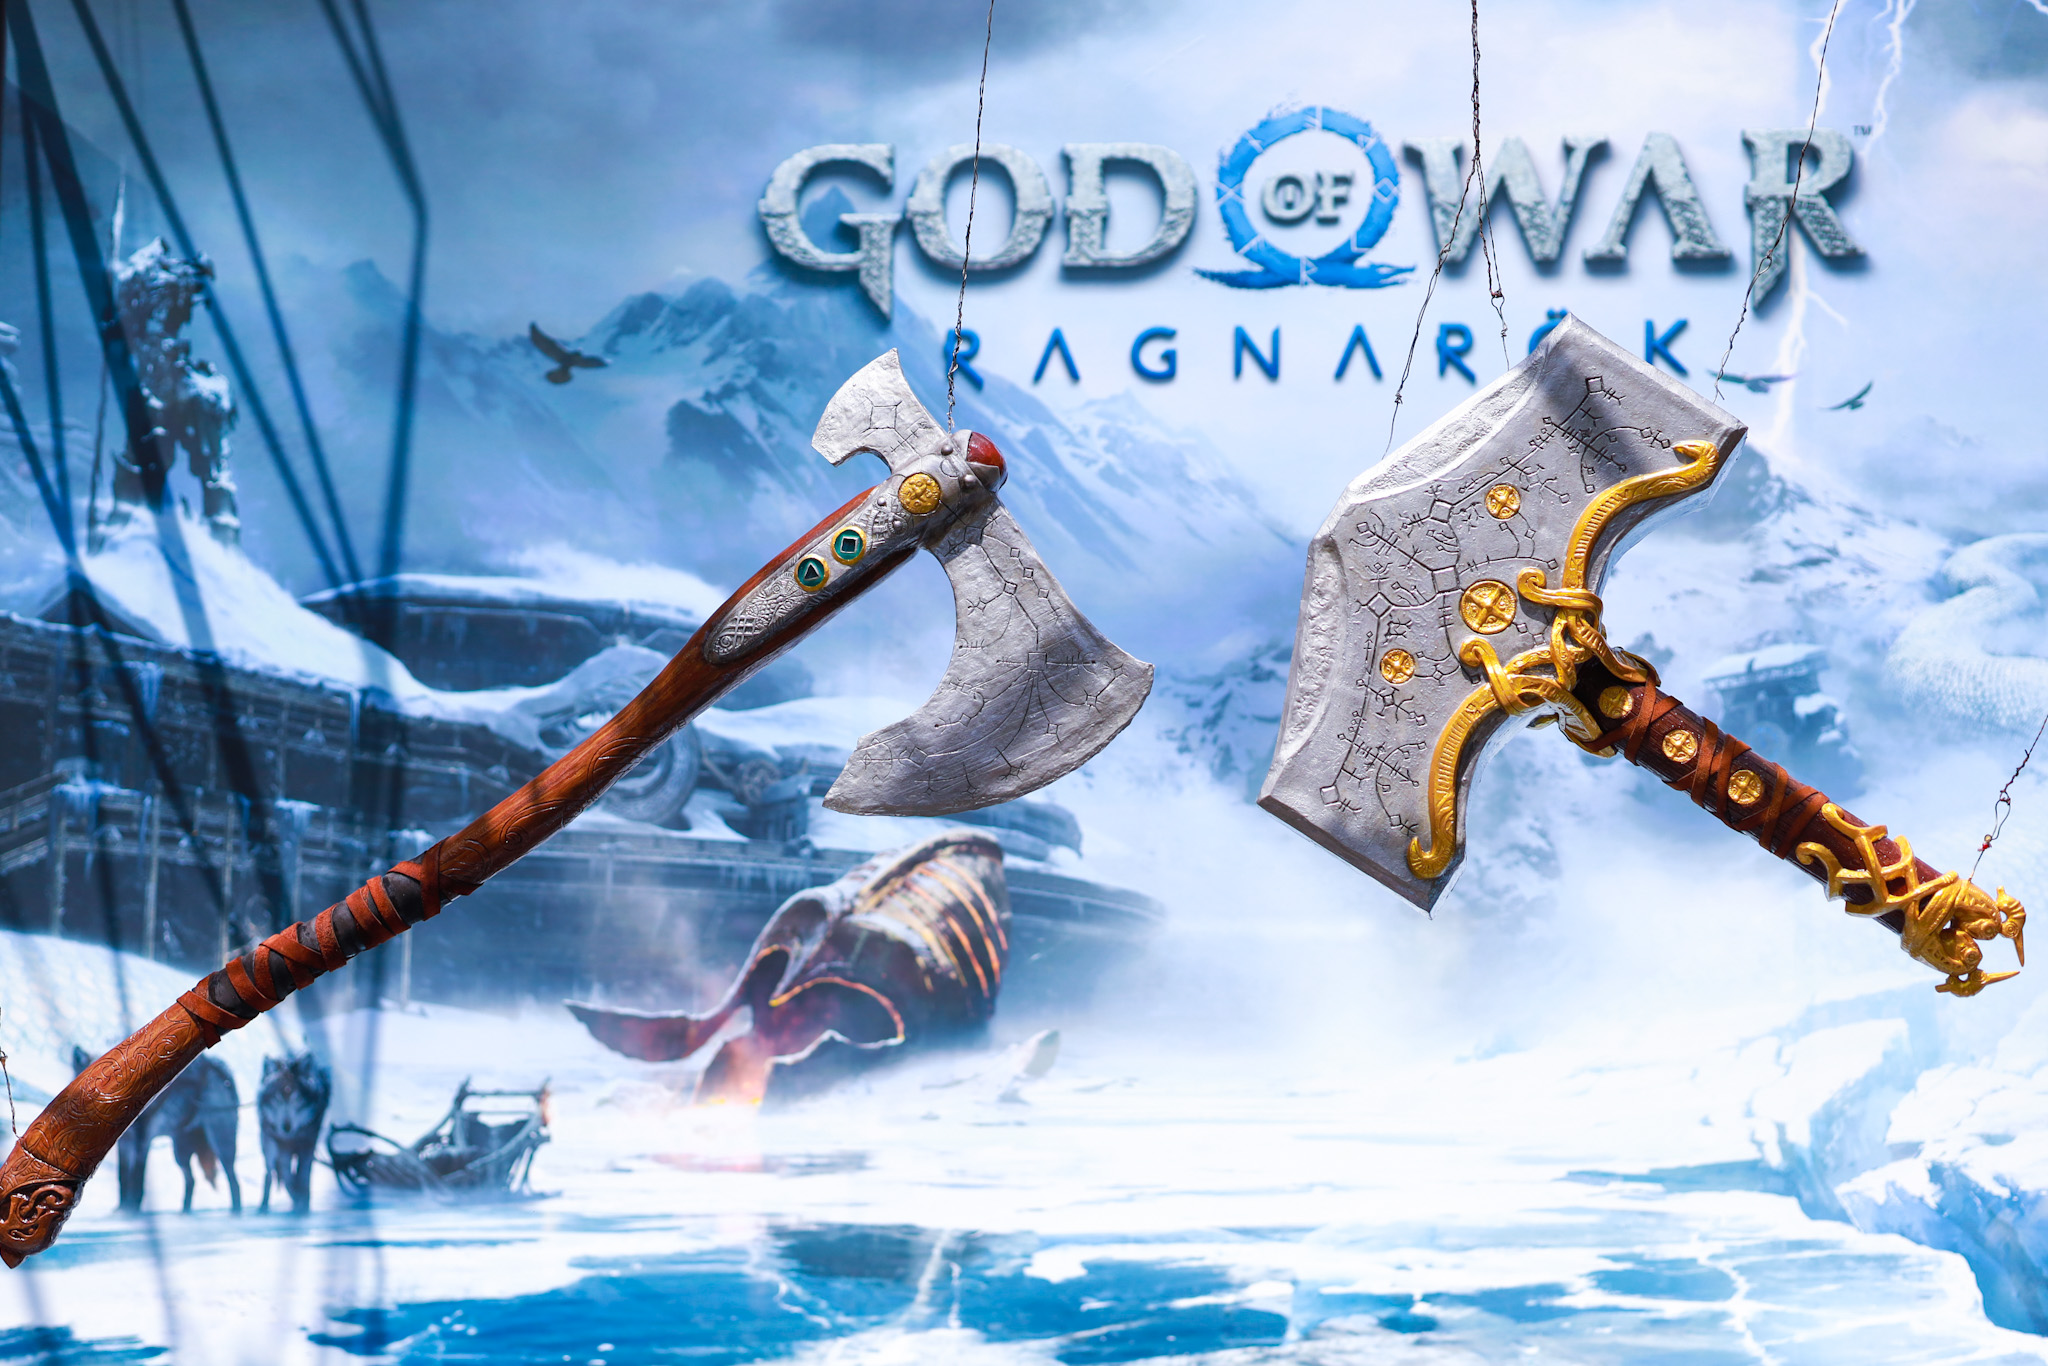 God of War Ragnarök Launch